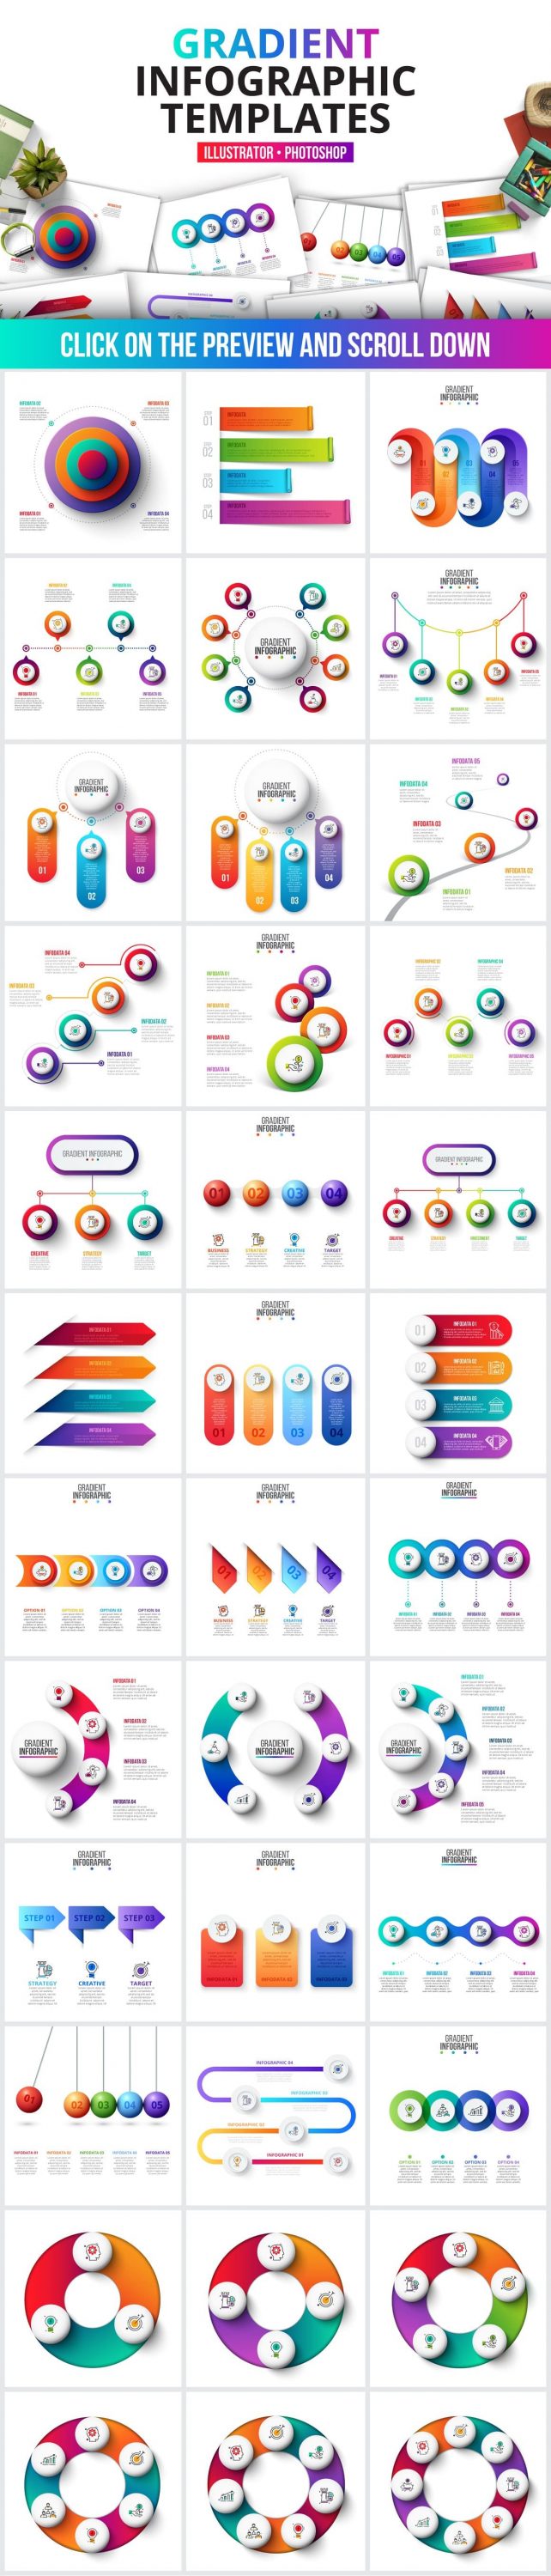 Gradient Infographic Templates Massive Animated PowerPoint Bundle.